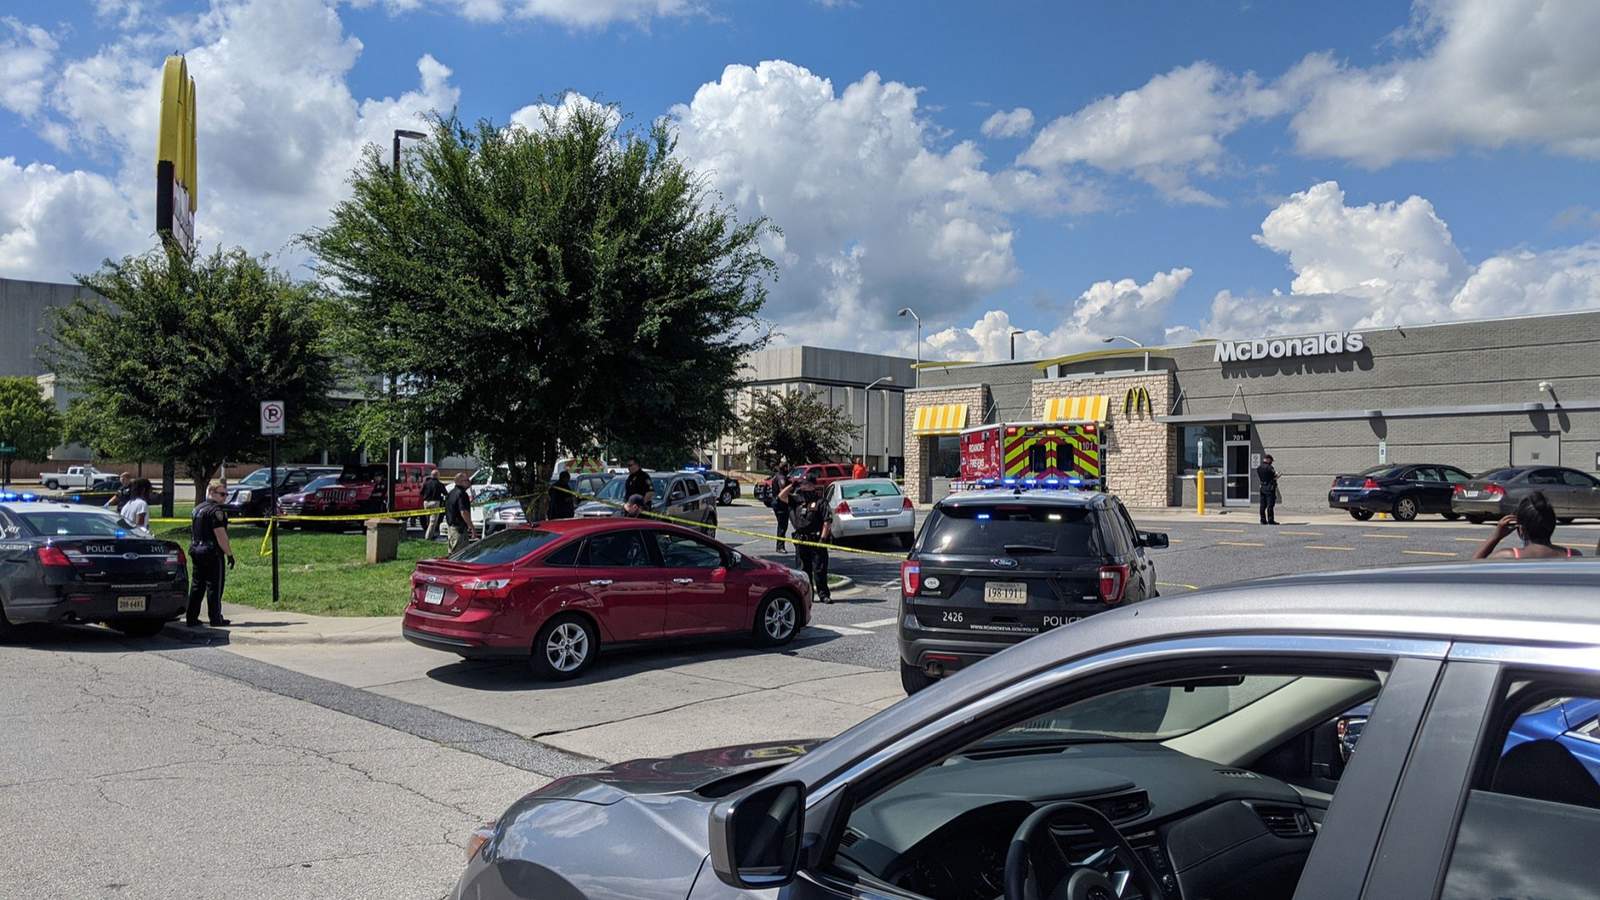 Warrants reveal suspect in fatal shooting at Roanoke McDonald’s near Berglund Center